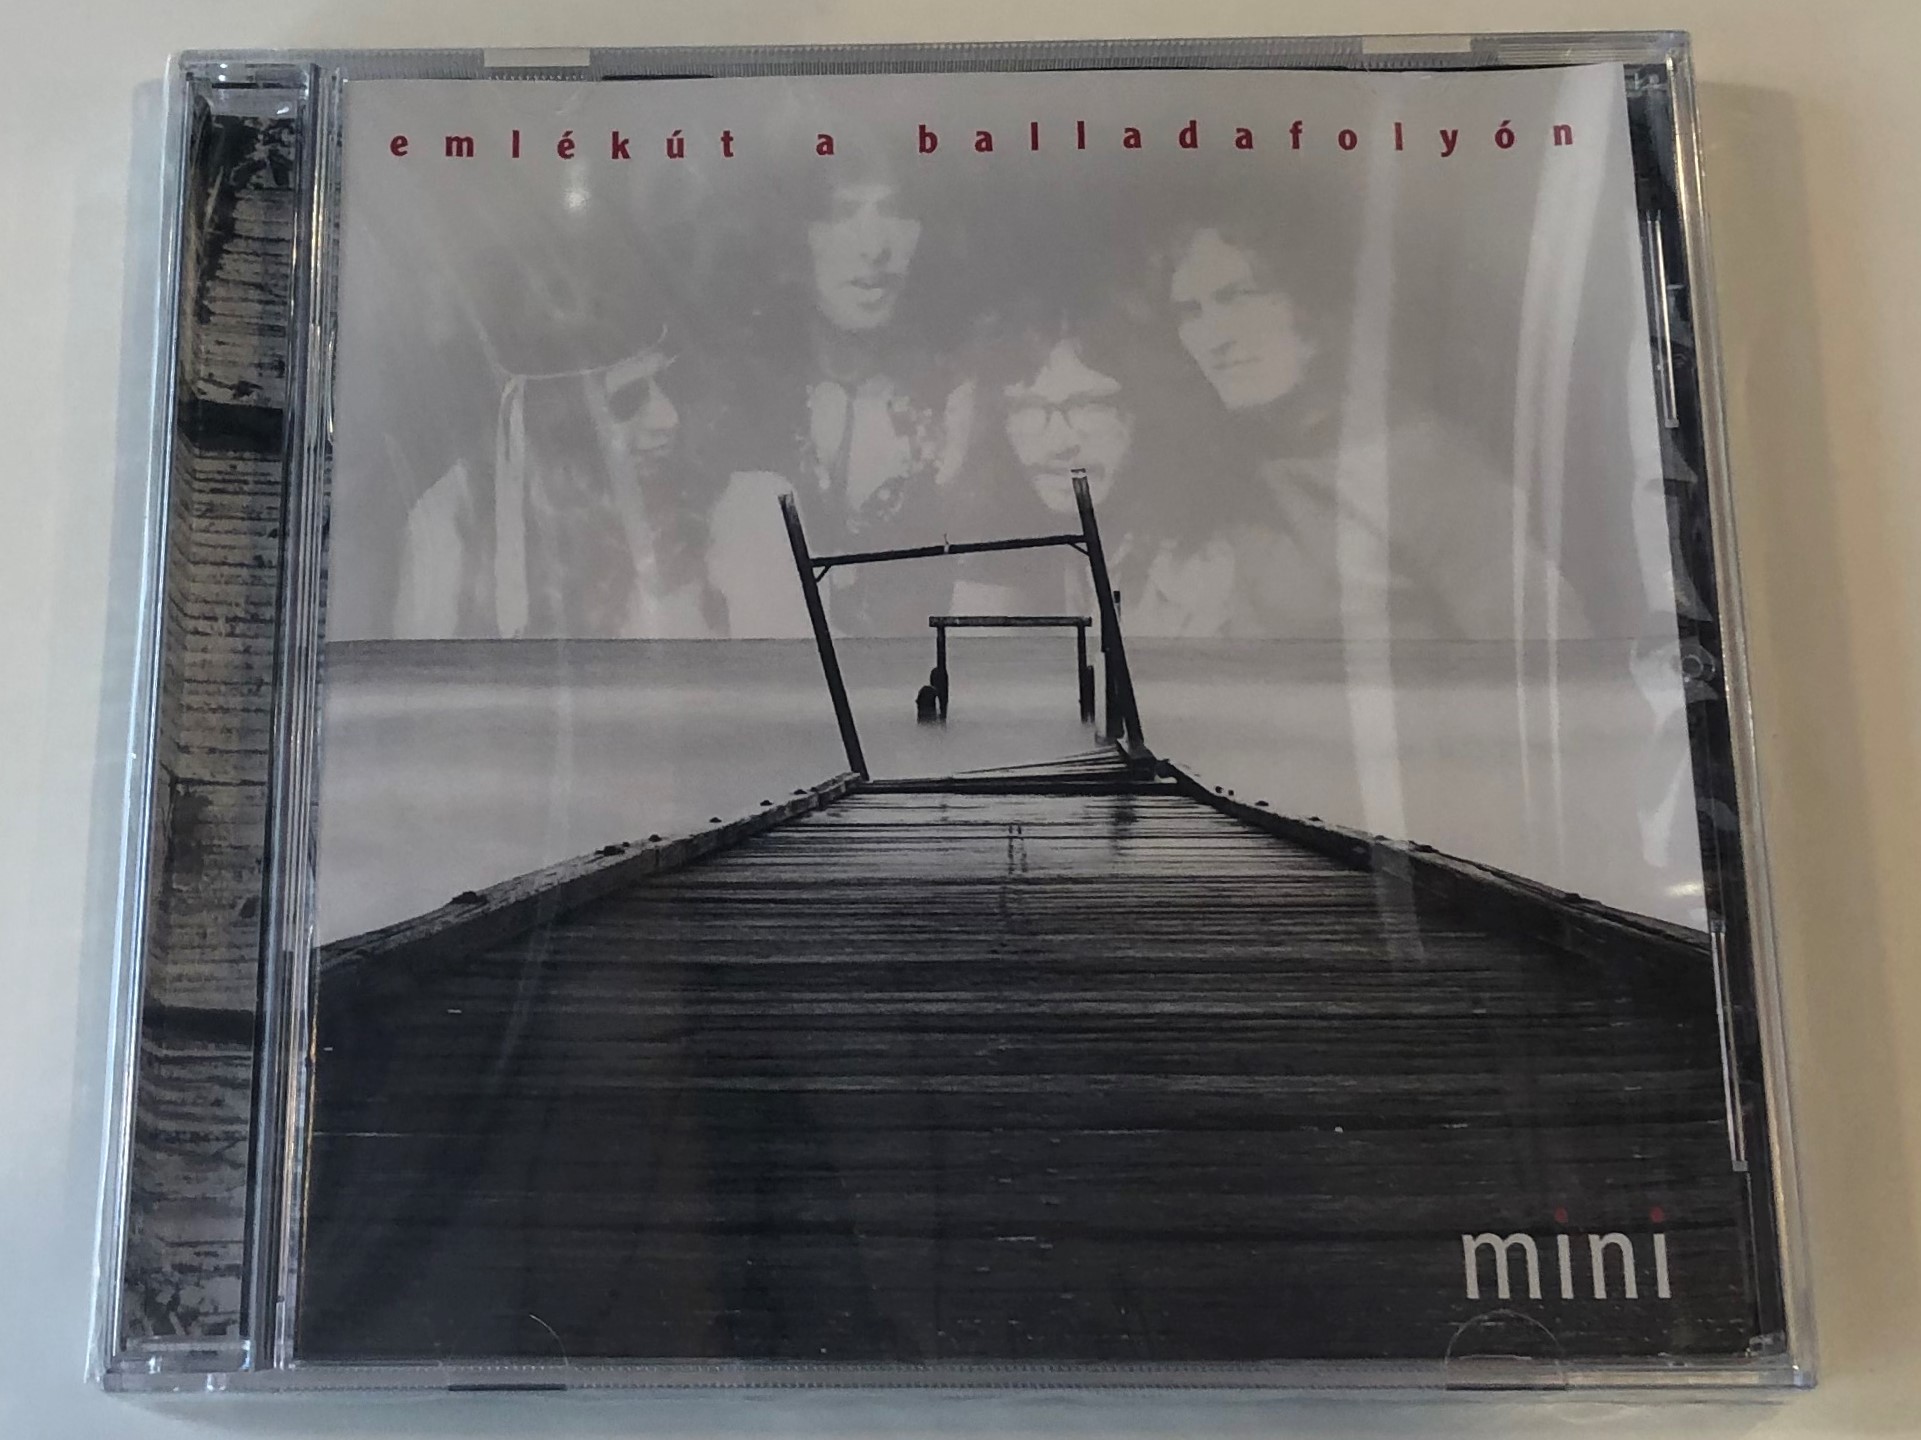 eml-k-t-a-balladafoly-n-mini-grundrecords-audio-cd-2015-gr041-1-.jpg